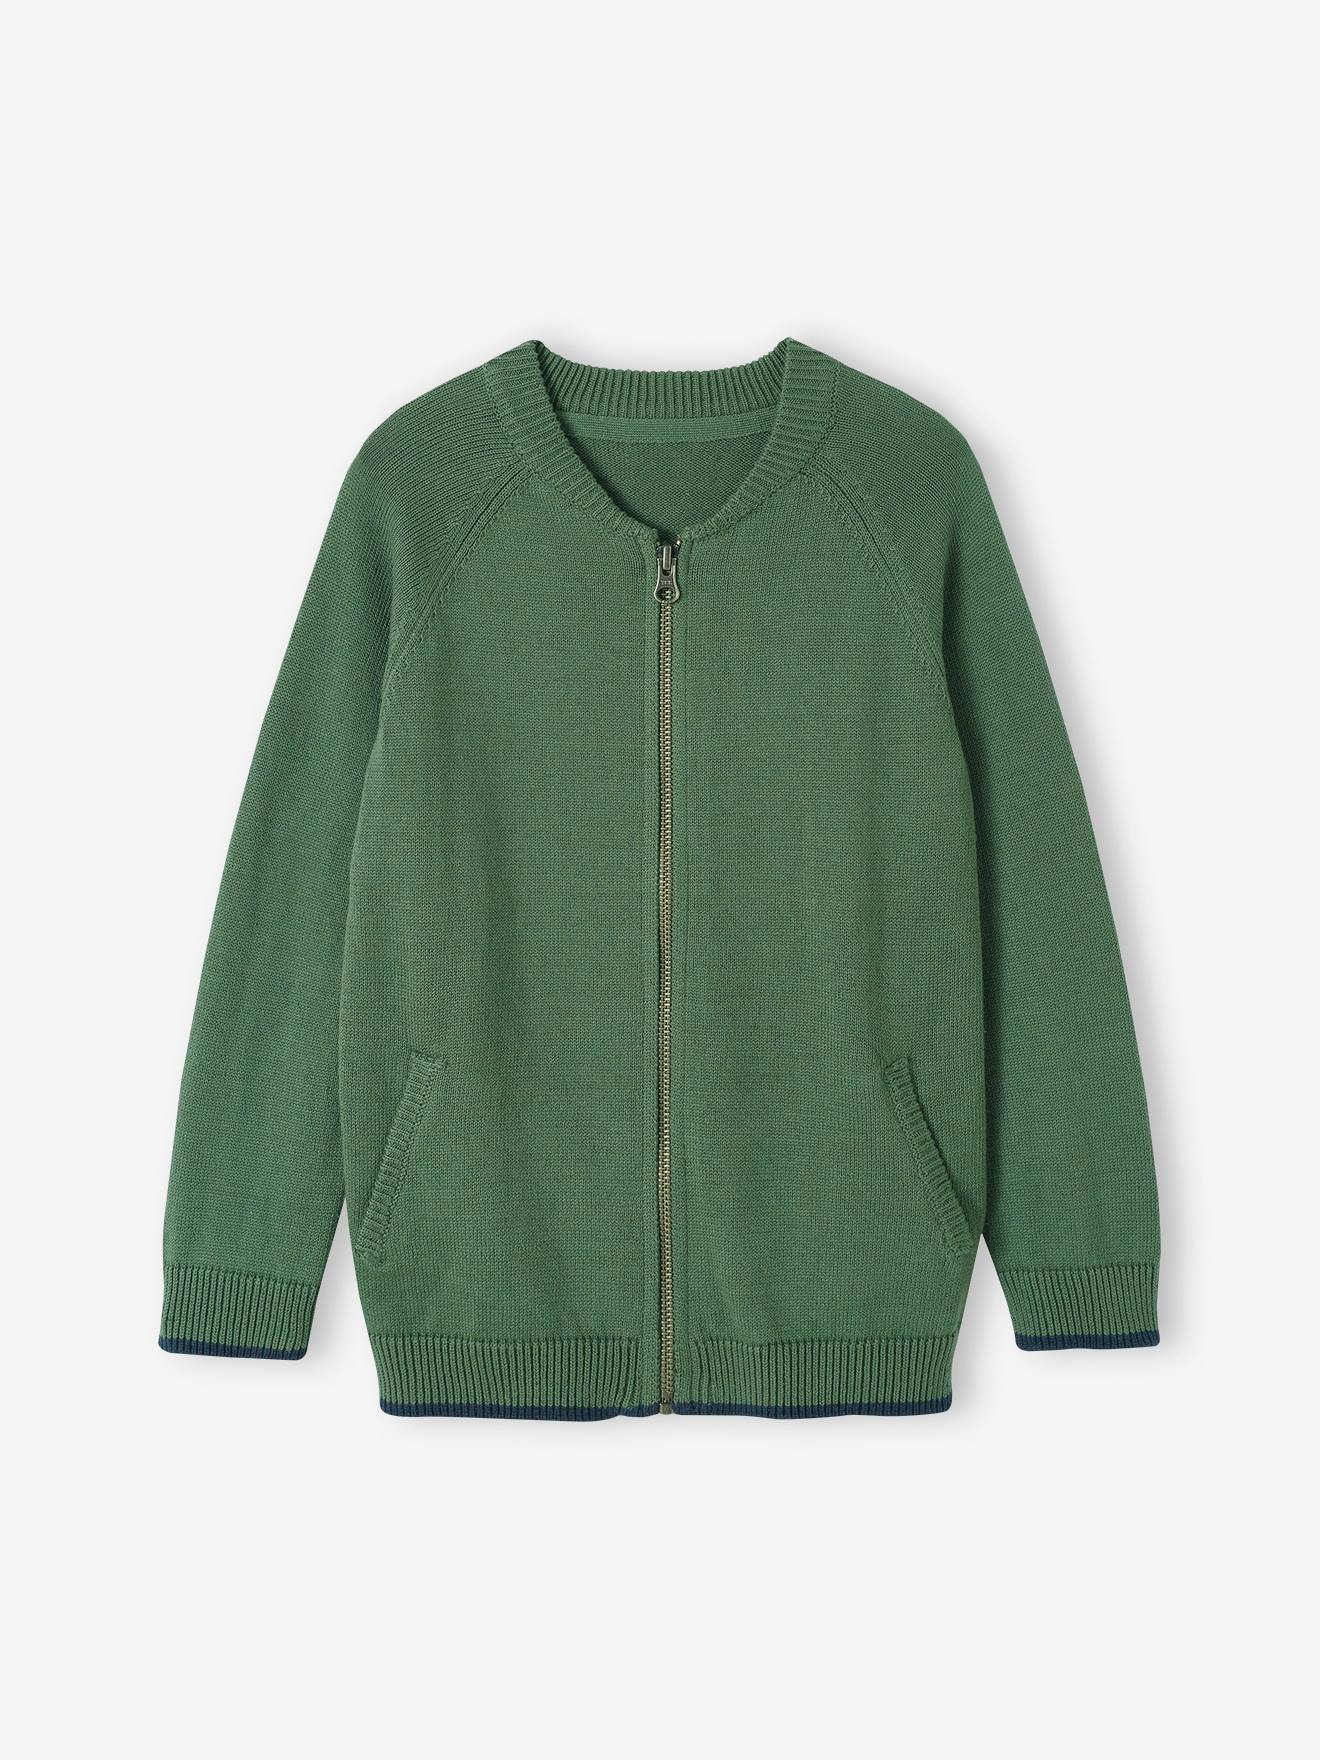 Zipped Varsity Jacket for Boys sage green